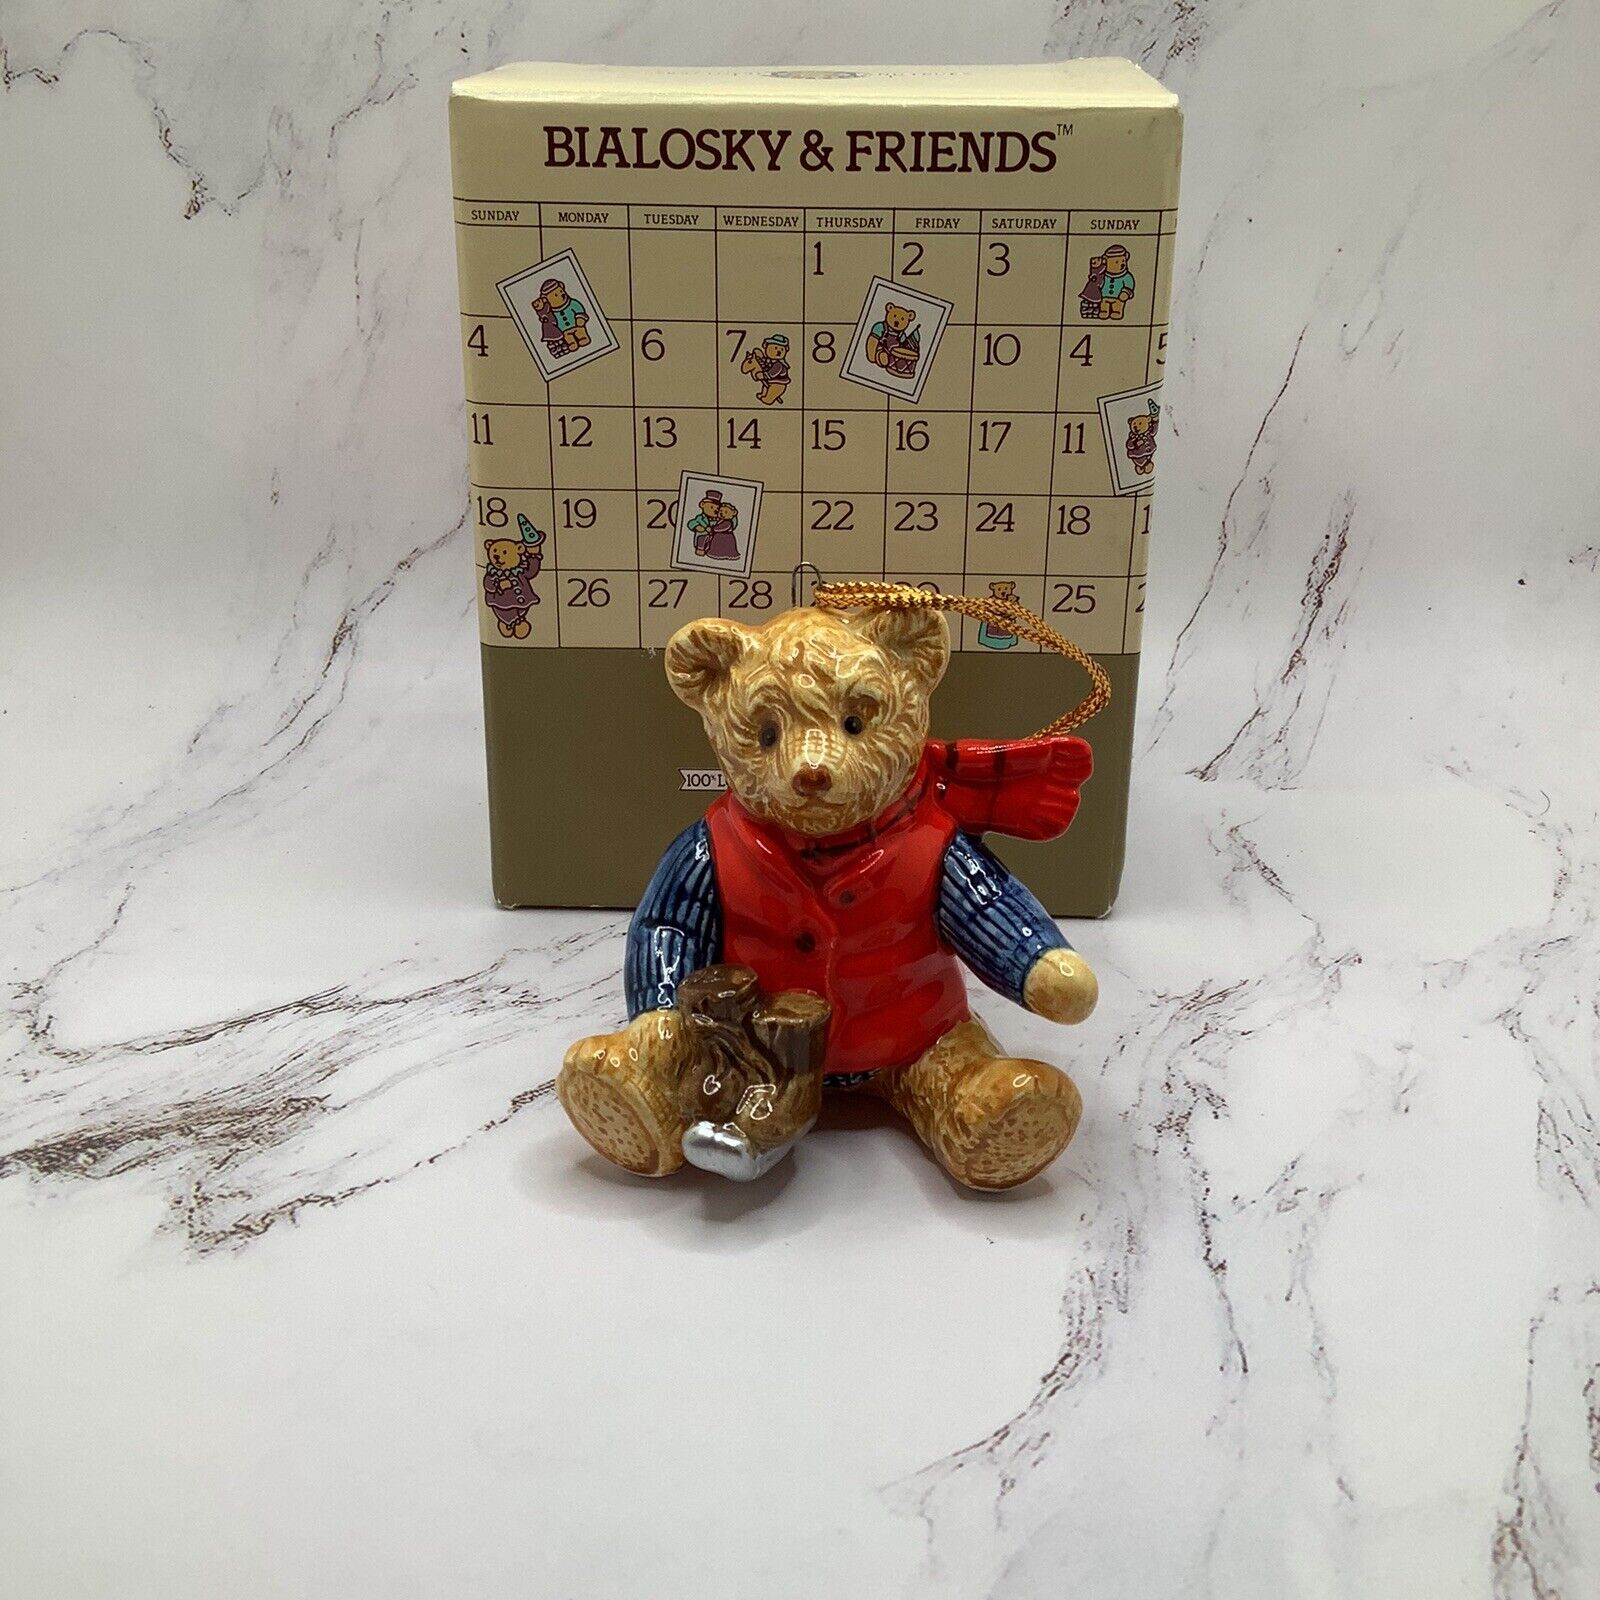 Vintage Goebel Bialosky & Friends Ceramic Teddy Bear Made In Japan 1985